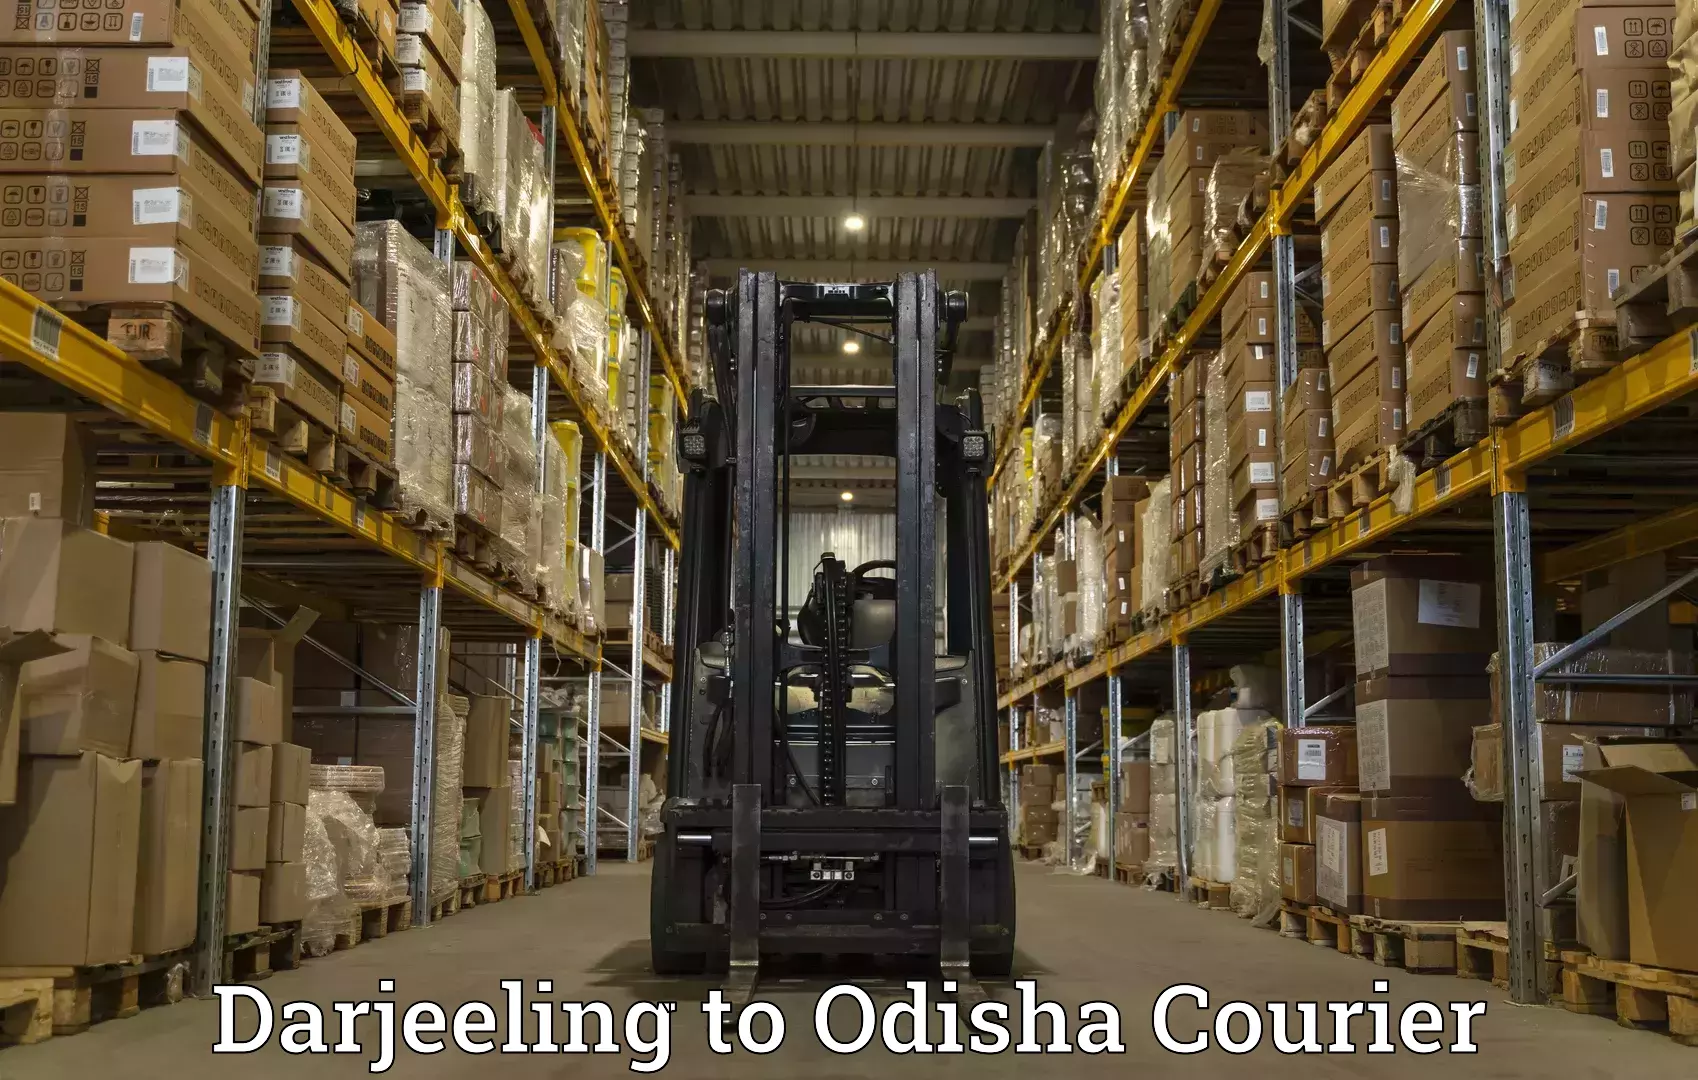 Nationwide delivery network Darjeeling to Odisha